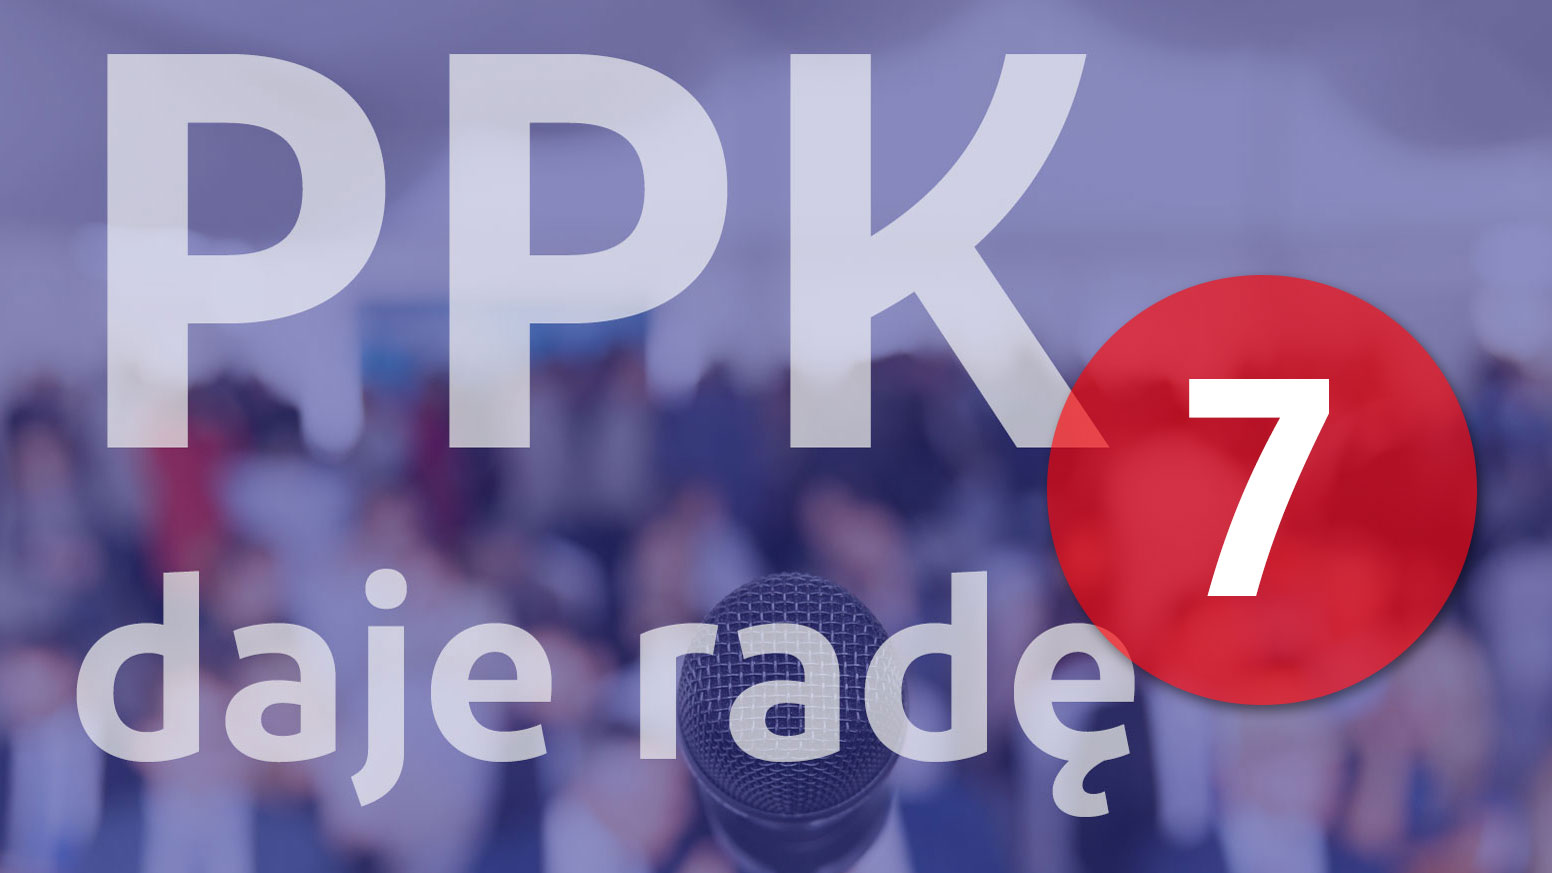 PPK daje radę - 7 odcinek podcastu portalu MojePPK.pl już dostępny